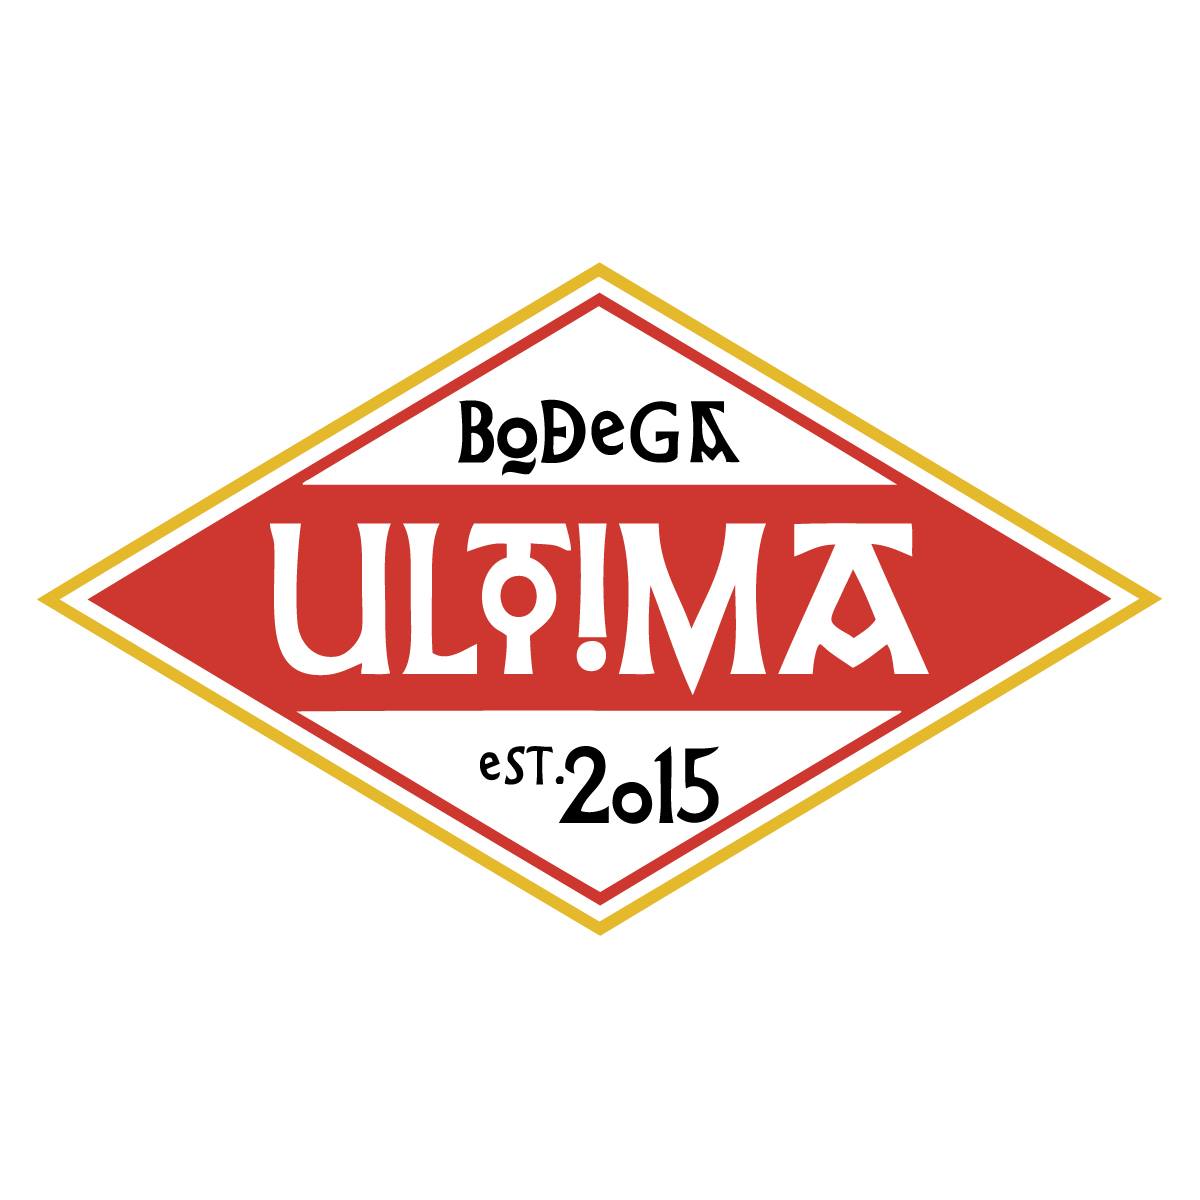 Bodega Ultima